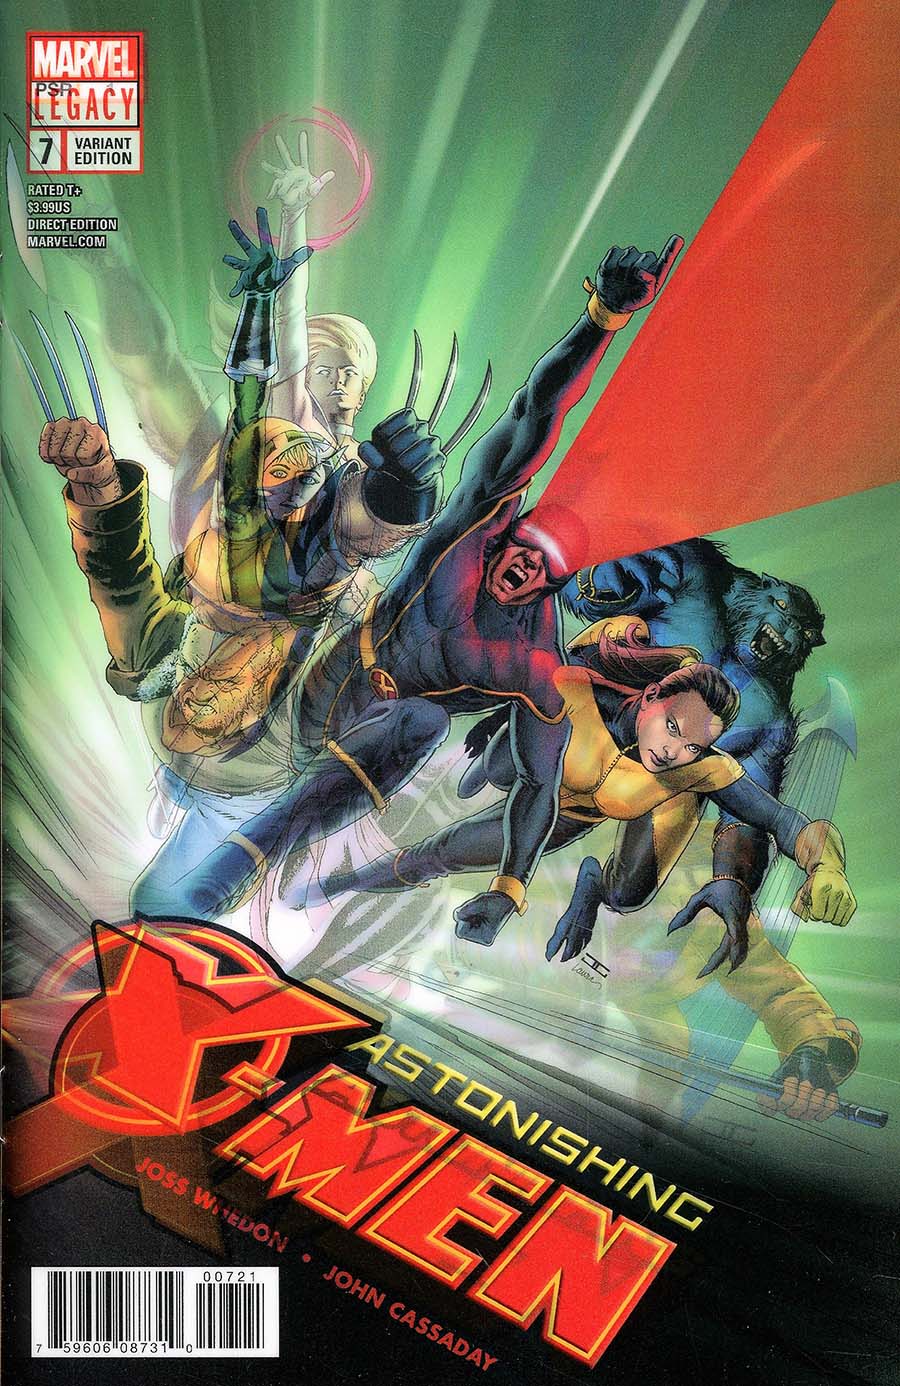 Astonishing X-Men Vol 4 #7 Cover B Variant John Cassaday Lenticular Homage Cover (Marvel Legacy Tie-In)